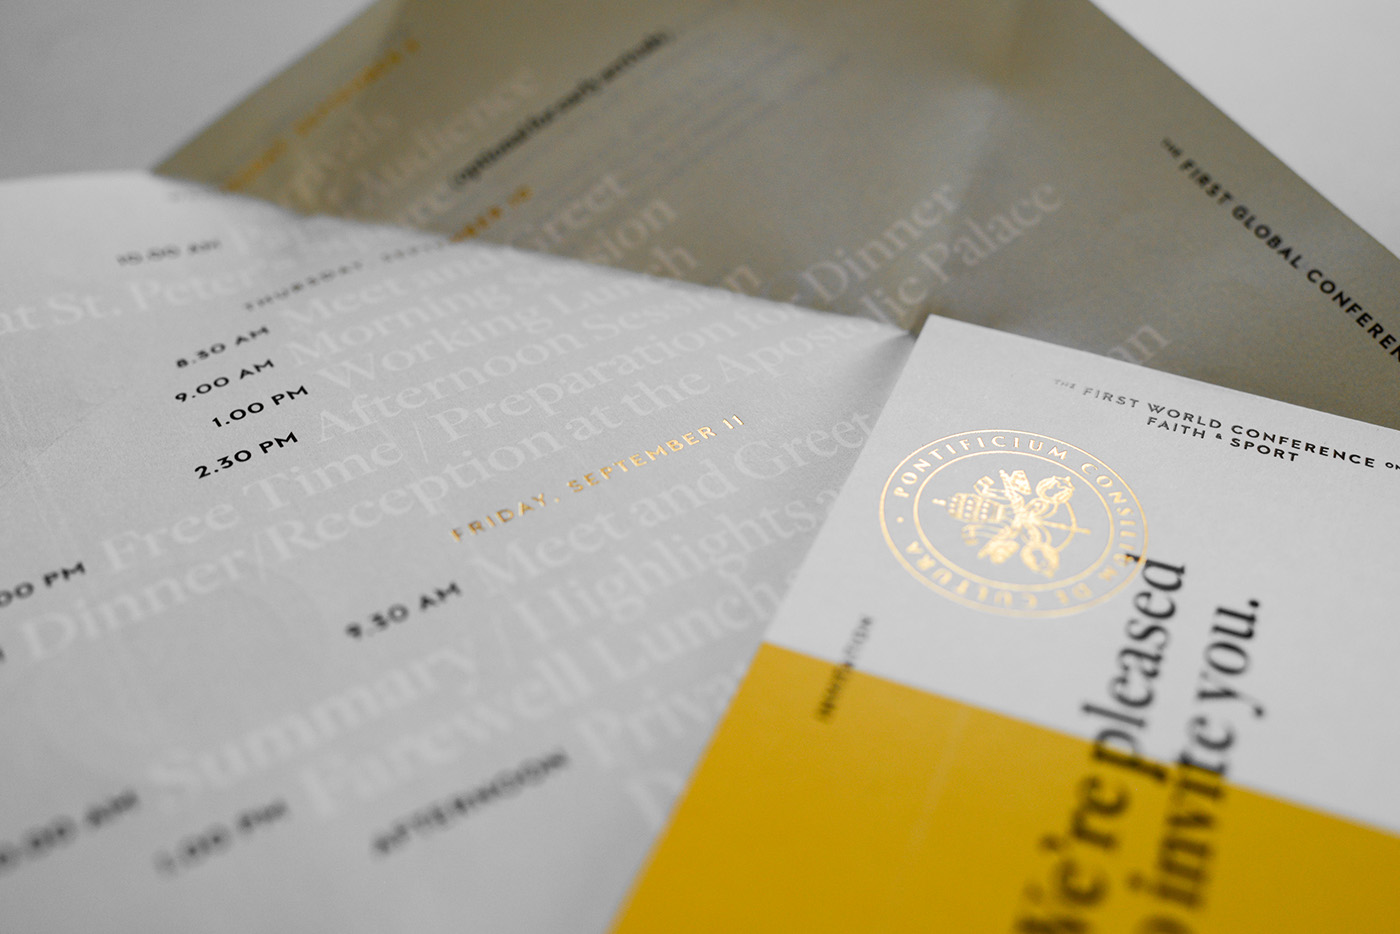 print Invitation Invitation Card seal wax letterpress typo Vatican City Event gold foil craft fold folding paper